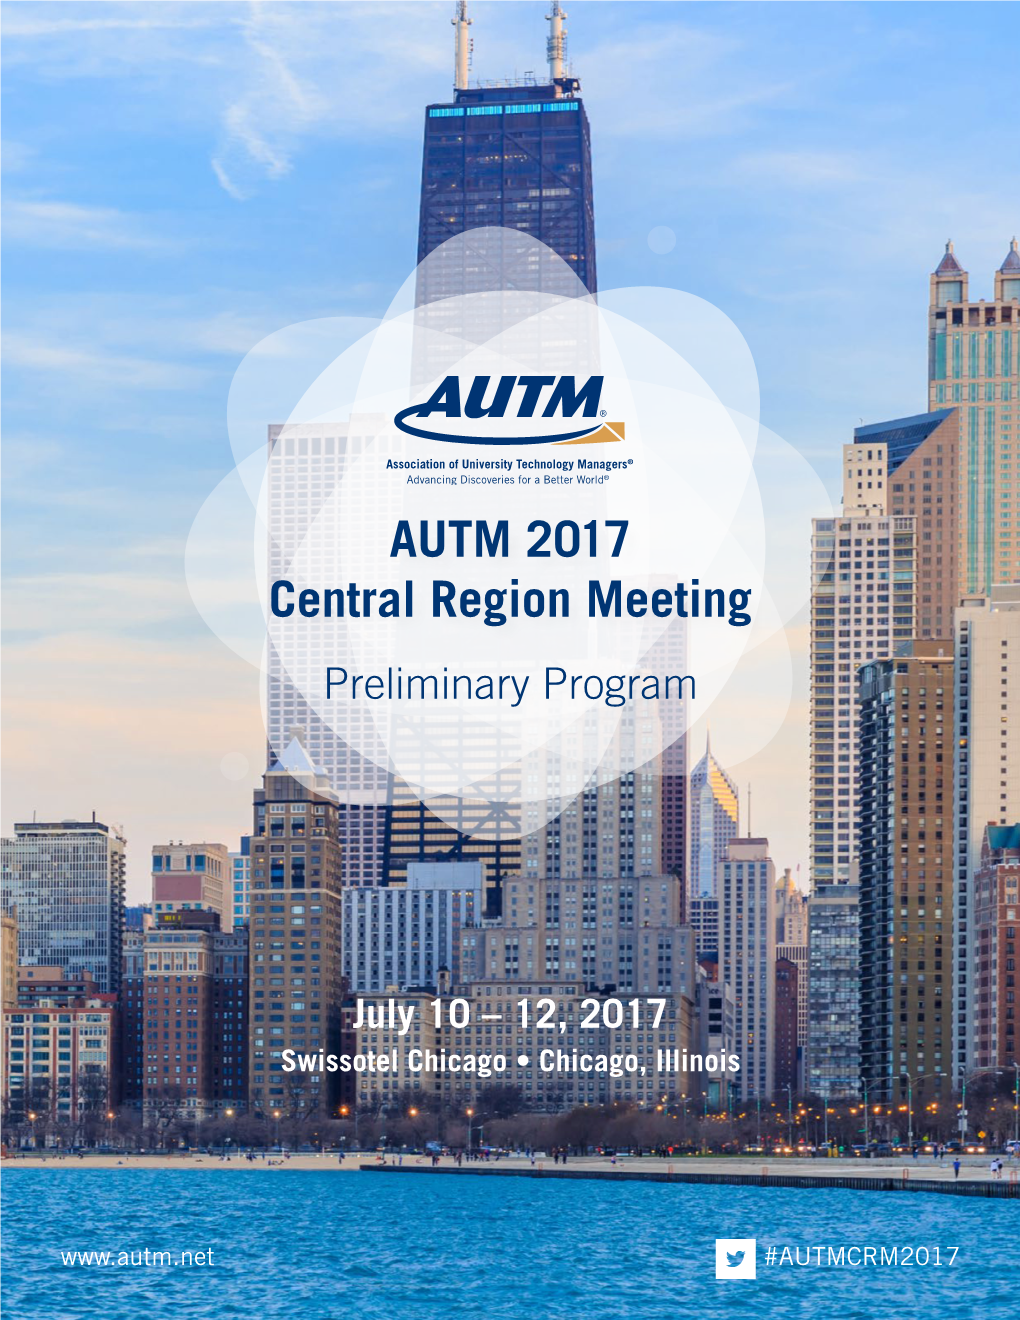 AUTM 2017 Central Region Meeting Preliminary Program